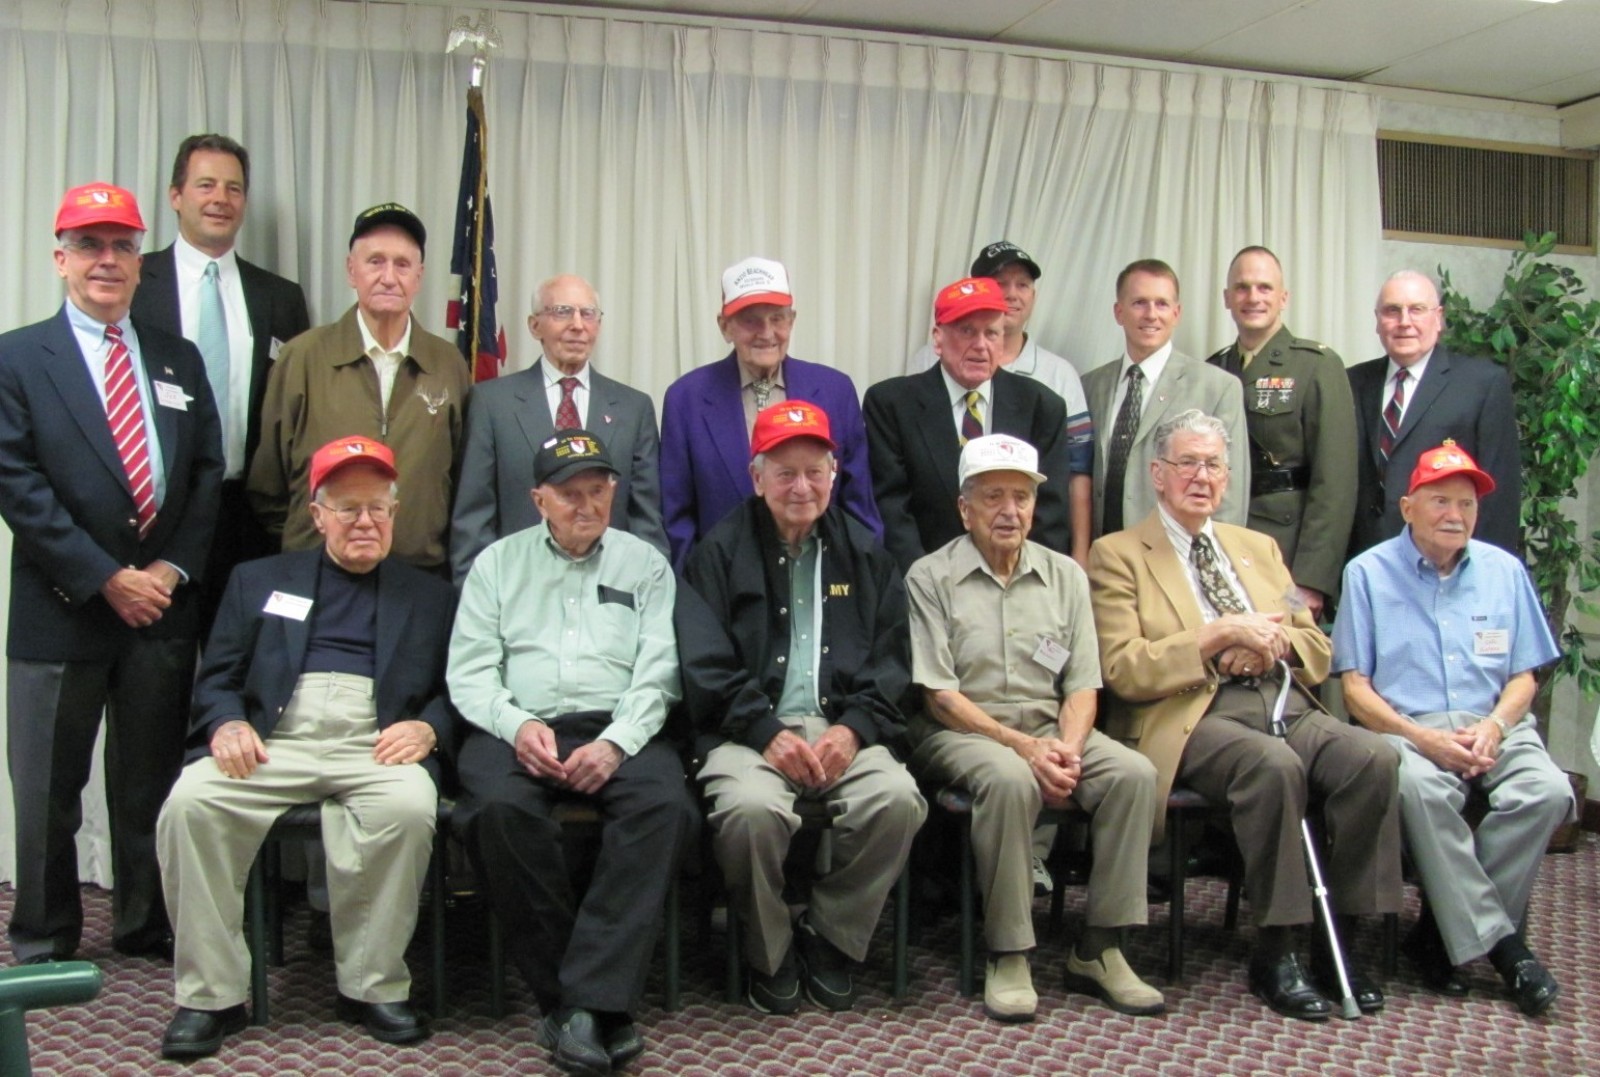 veterans WWII through present.JPG